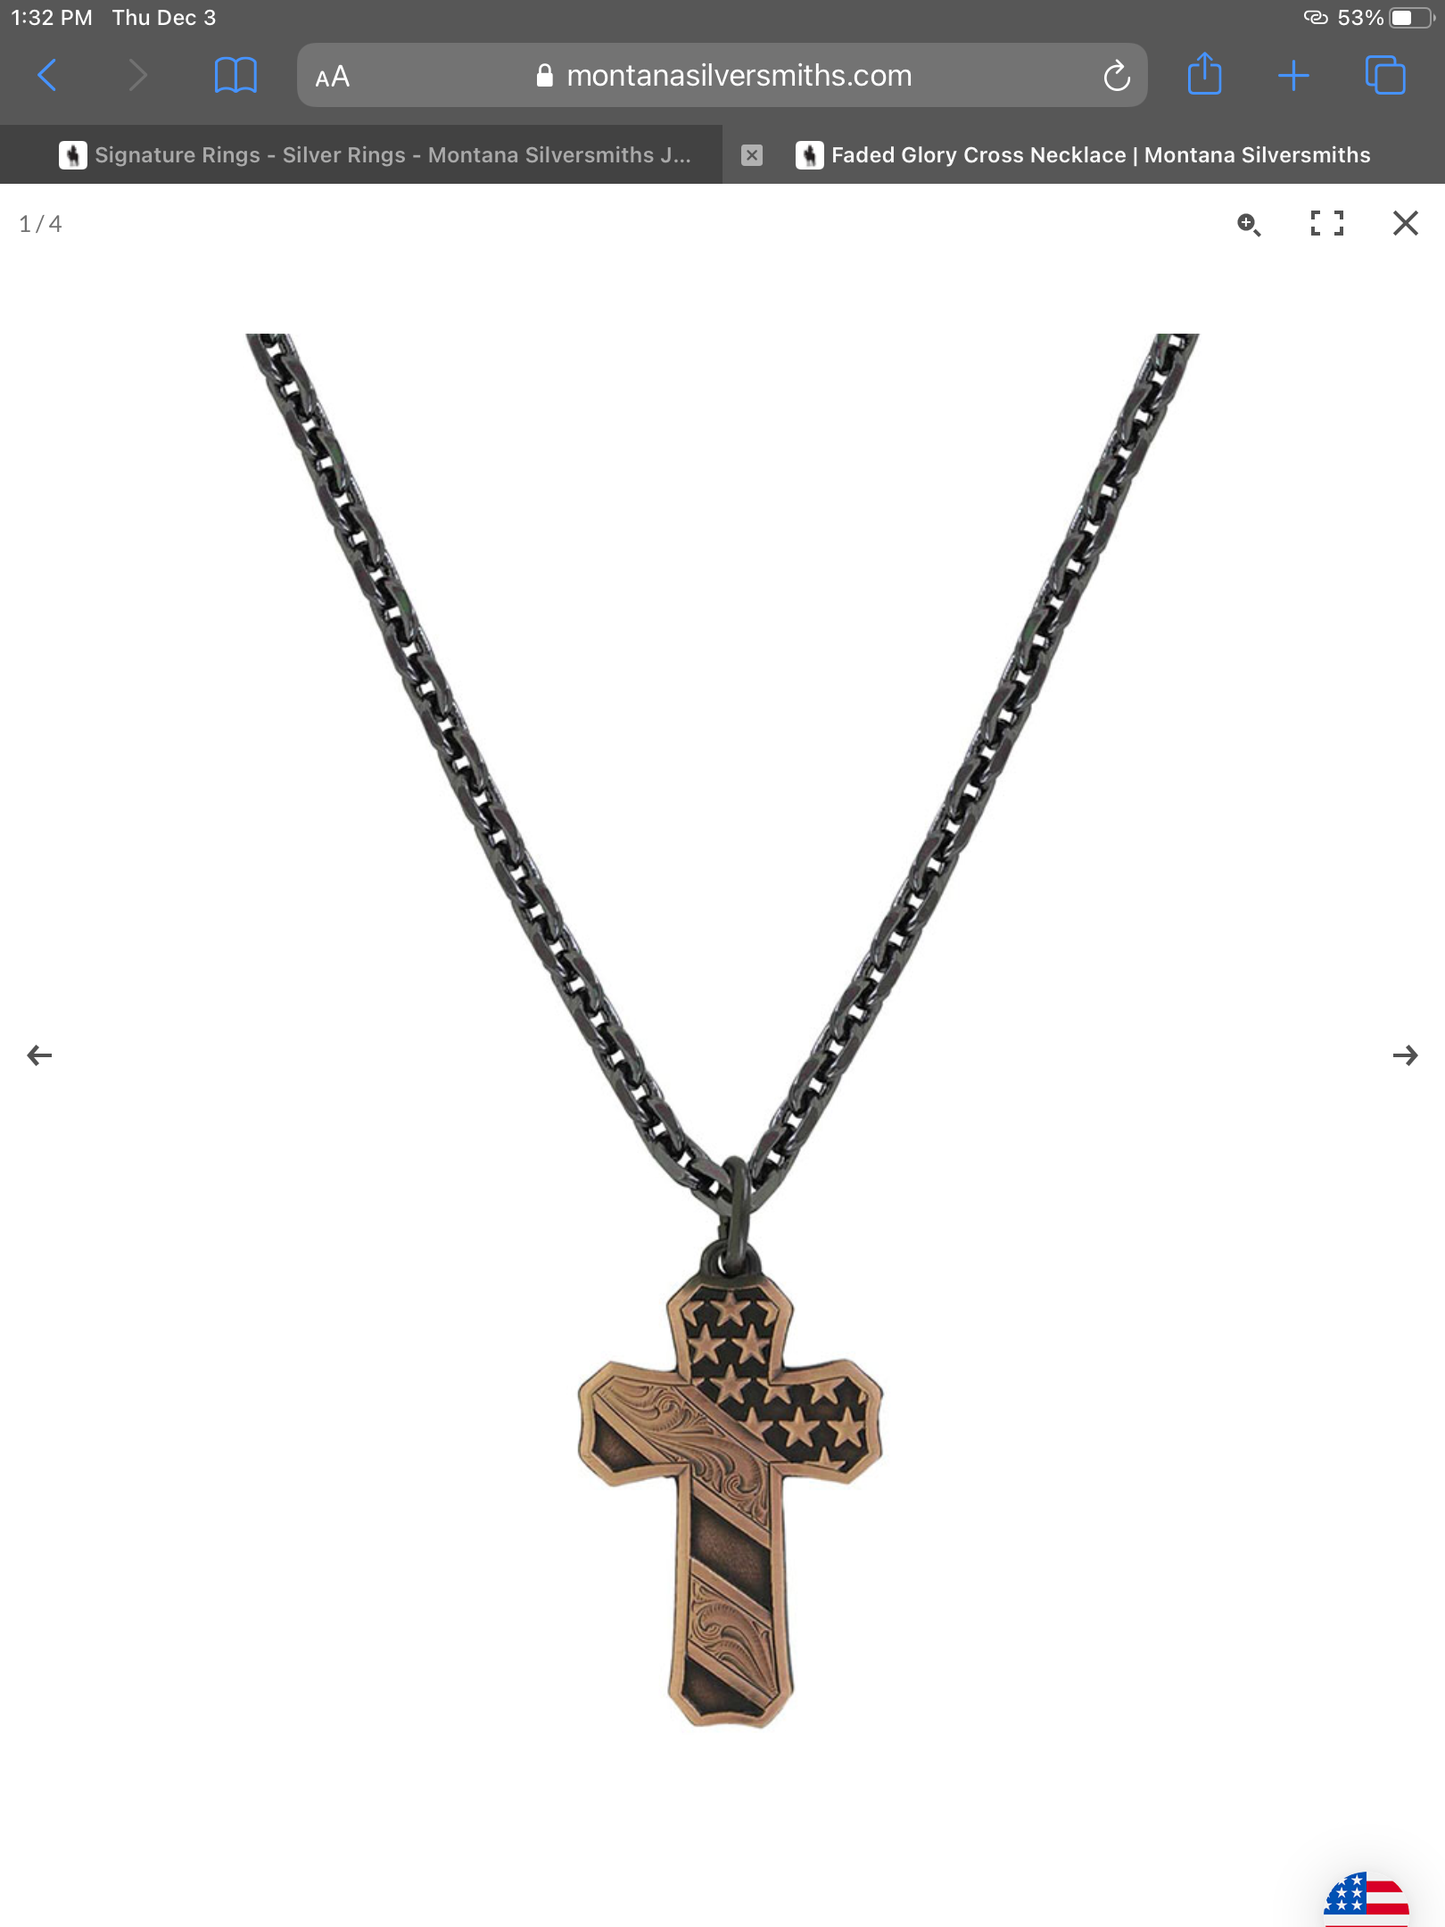 Montana Siversmith Faded Glory Cross Necklace